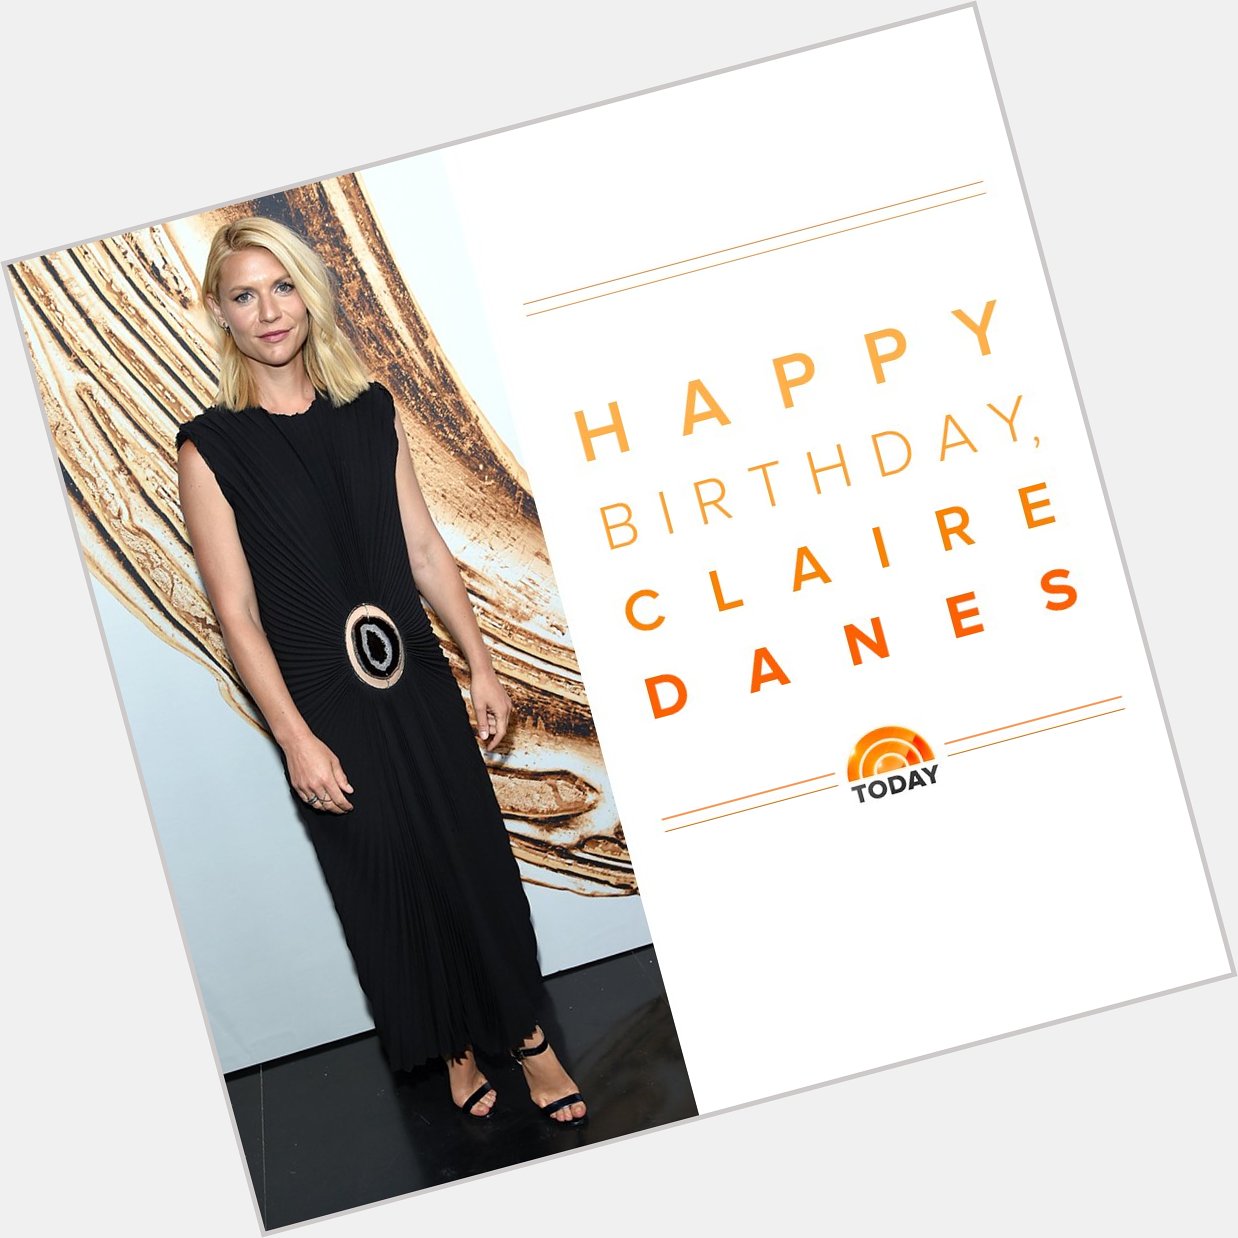 Happy birthday, Claire Danes! 